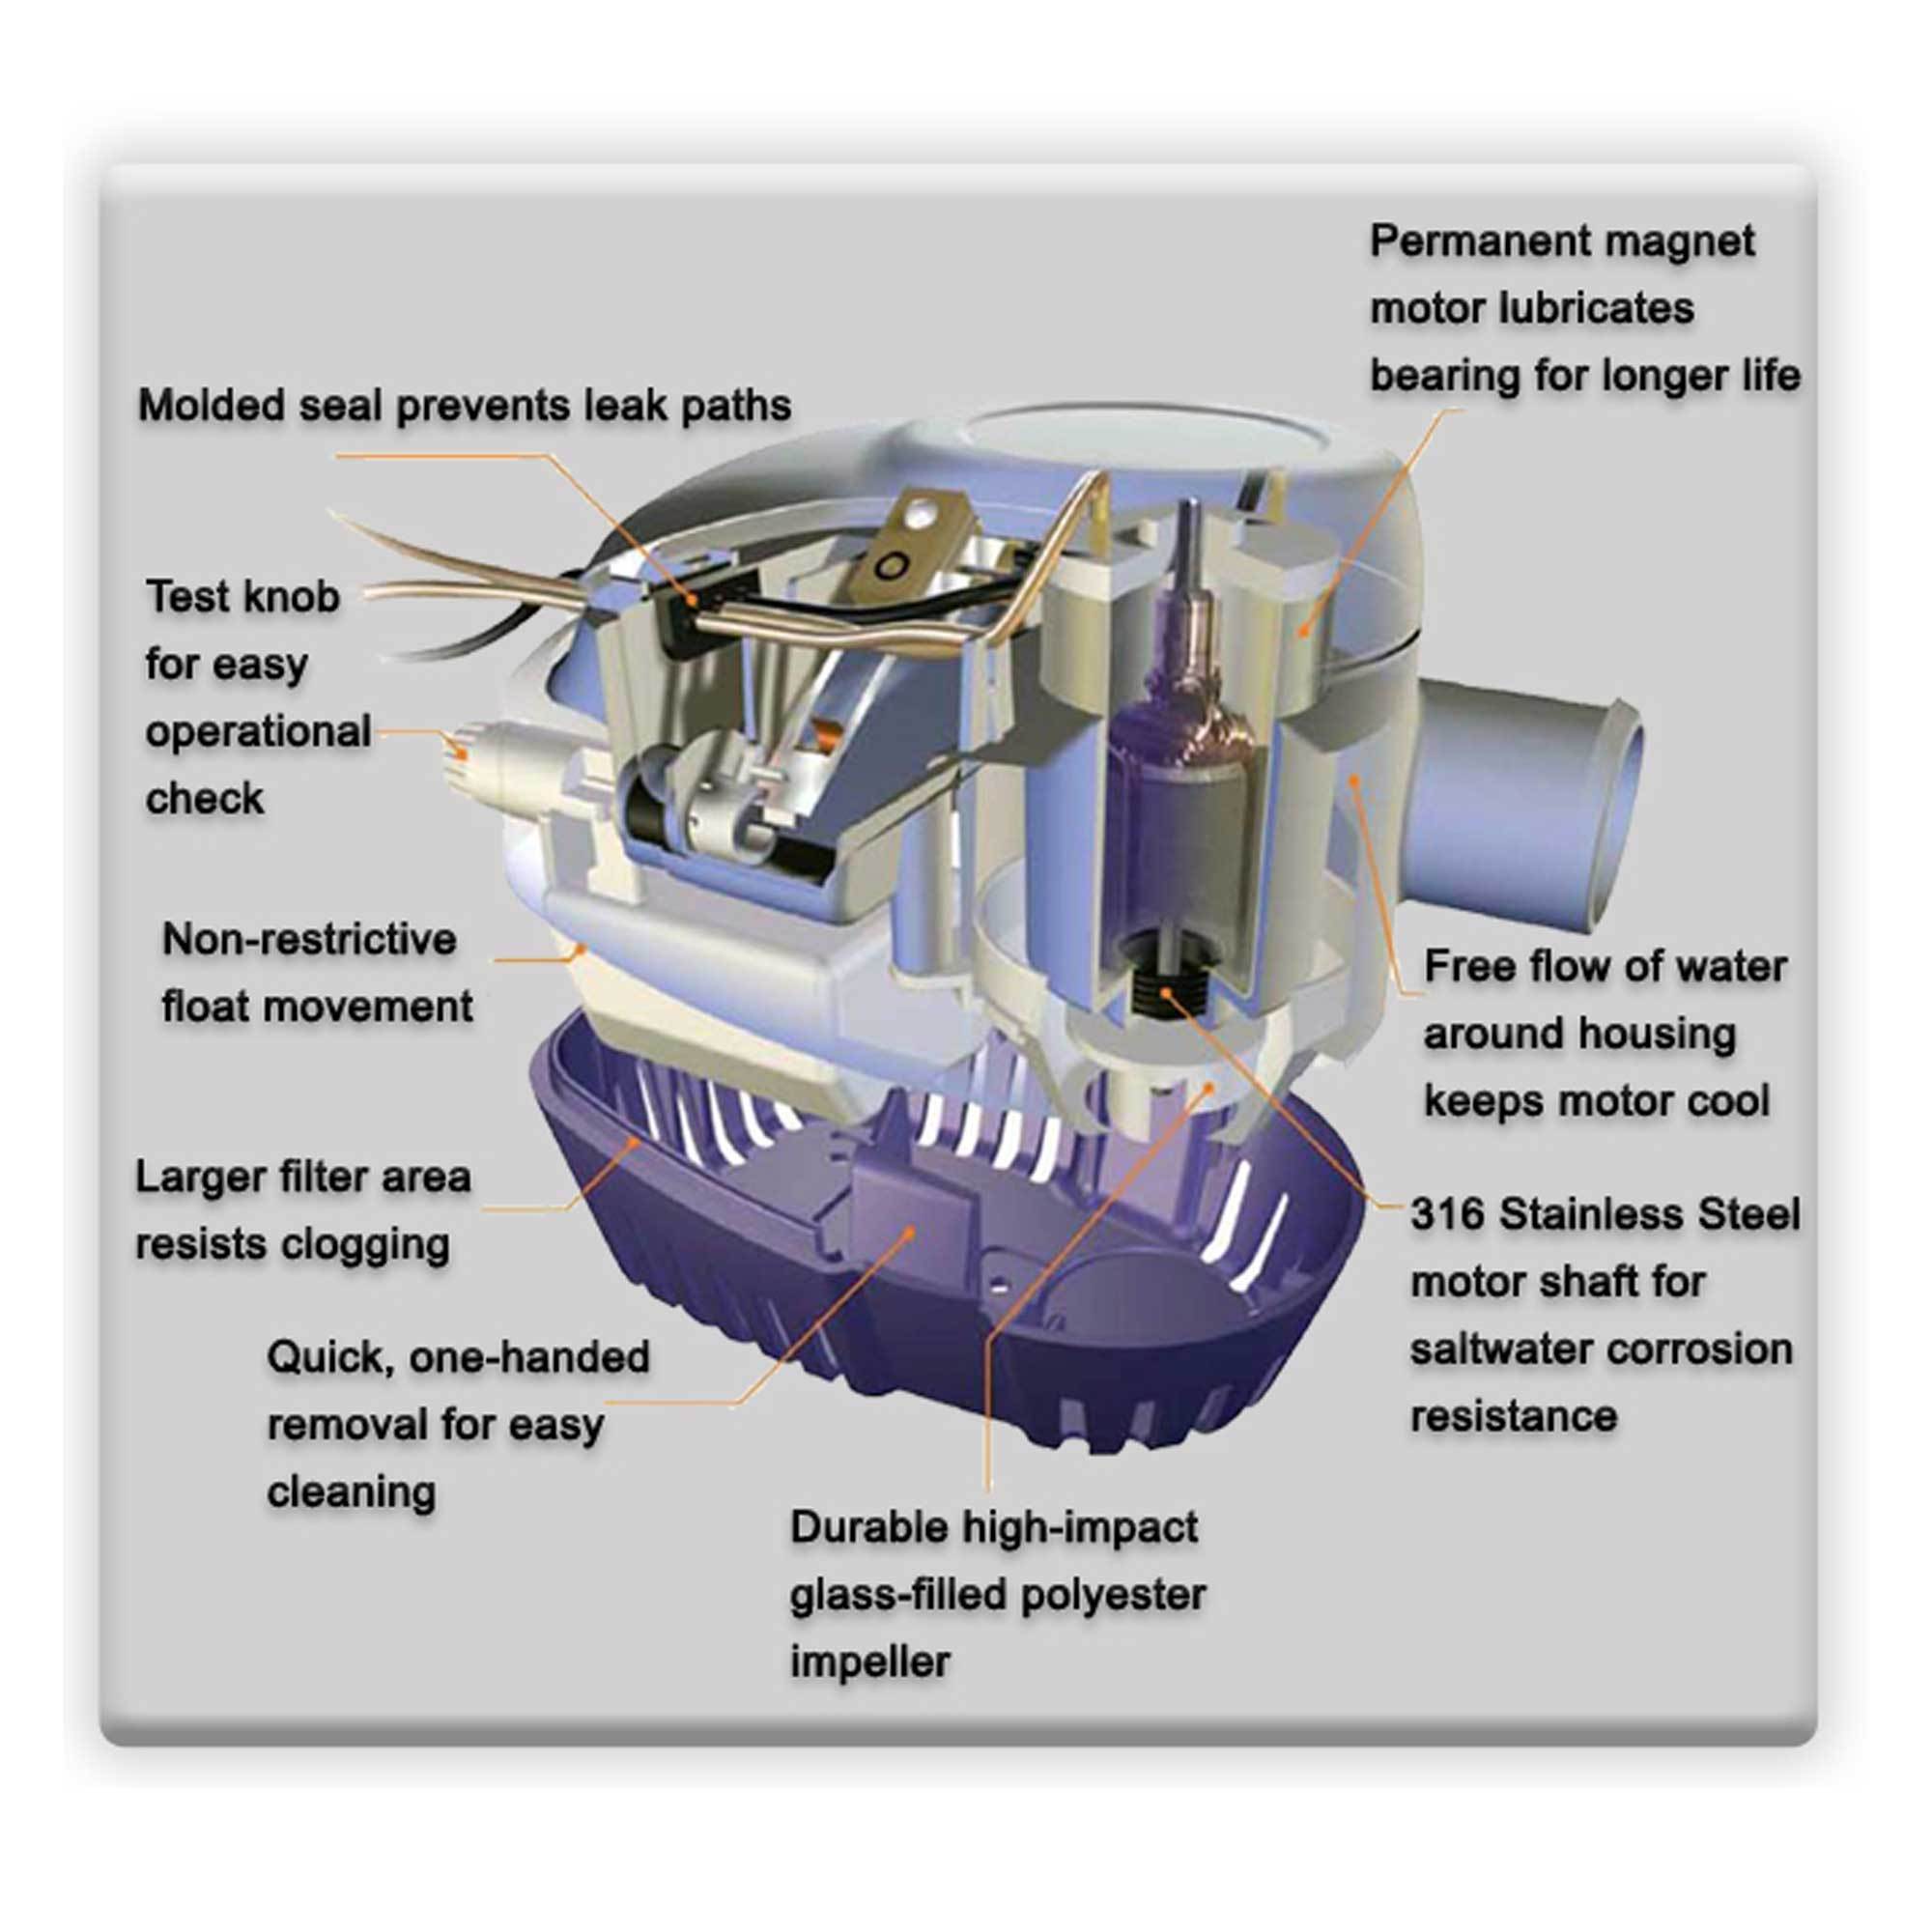 Sahara S1100 GPH Automatic Bilge Pump, 12V - Attwood-Canadian Marine &amp; Outdoor Equipment